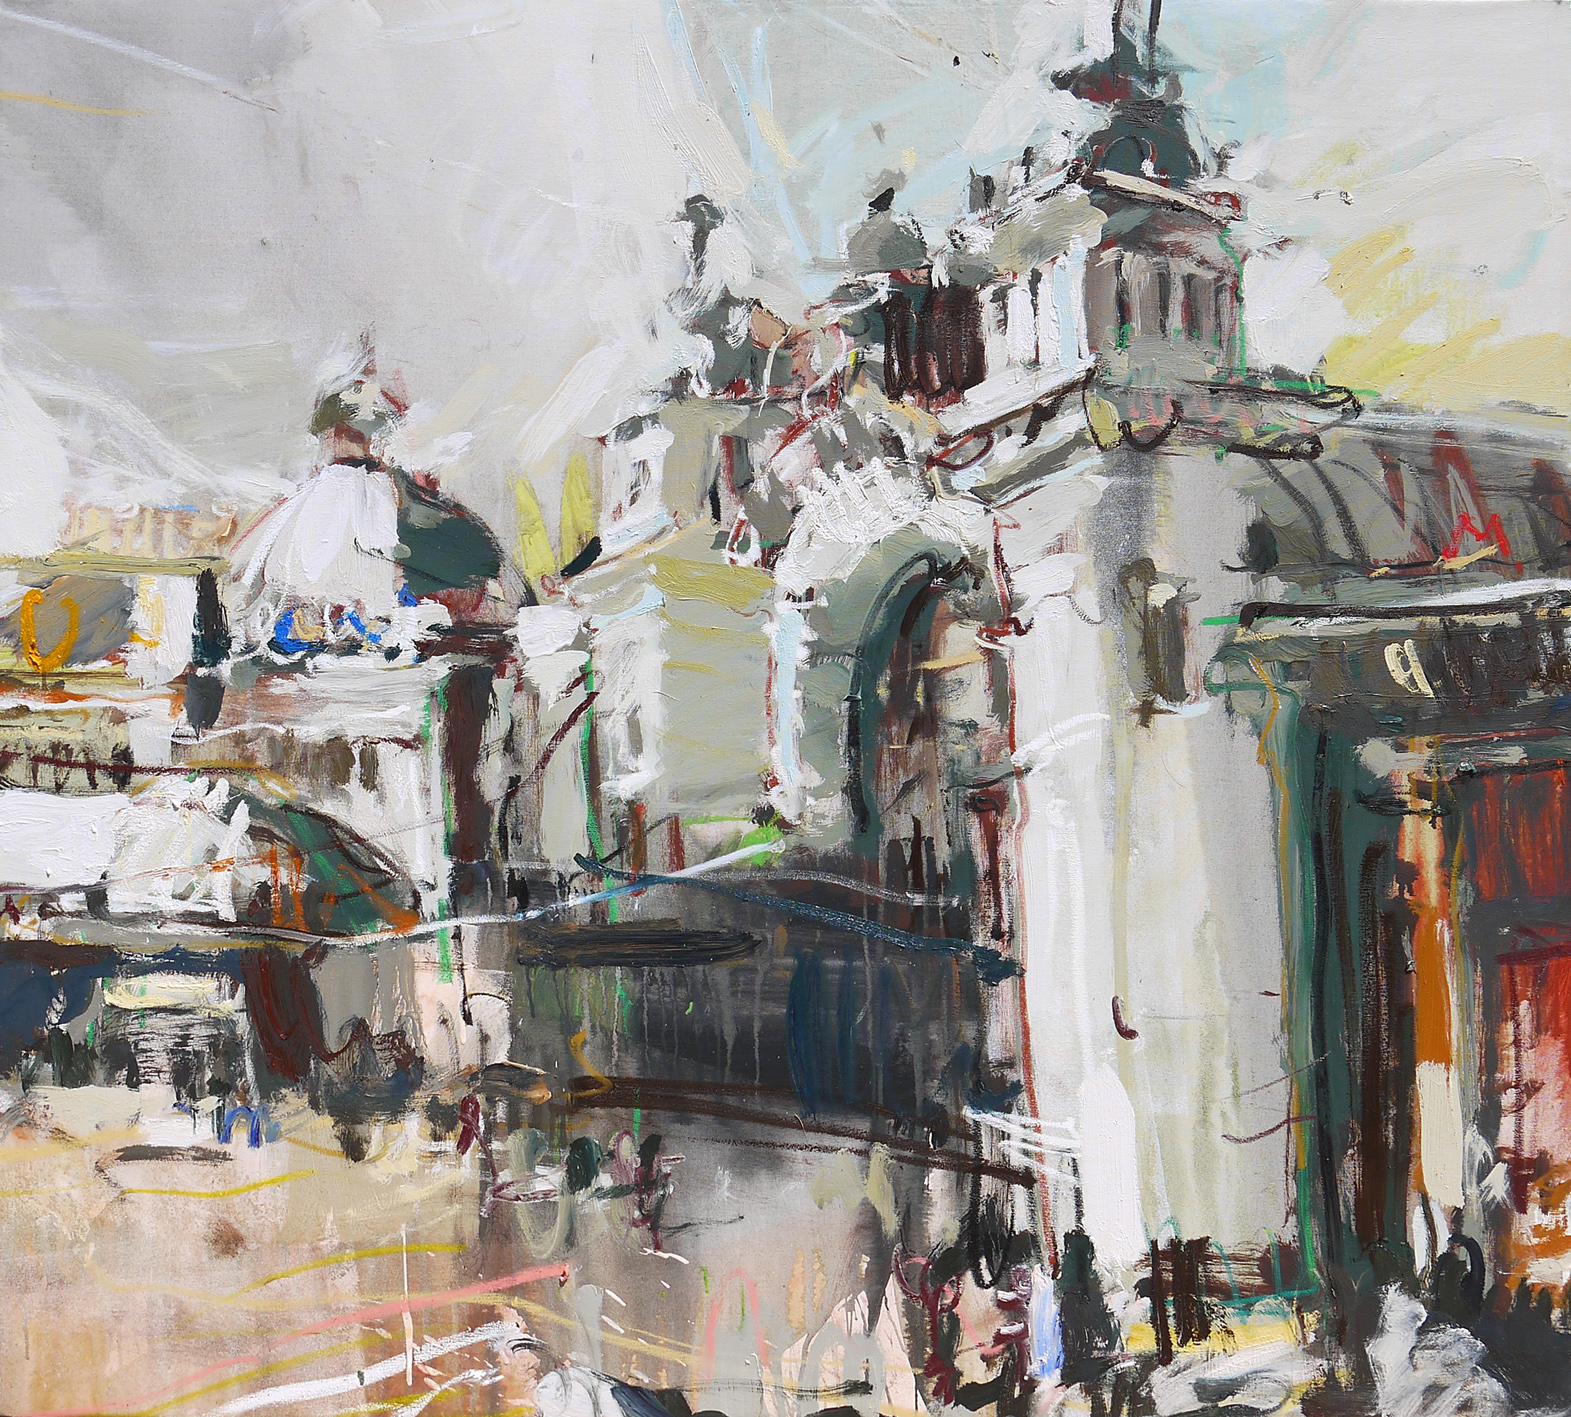 Belorussky Station. 2014, oil on canvas. 140 x 150